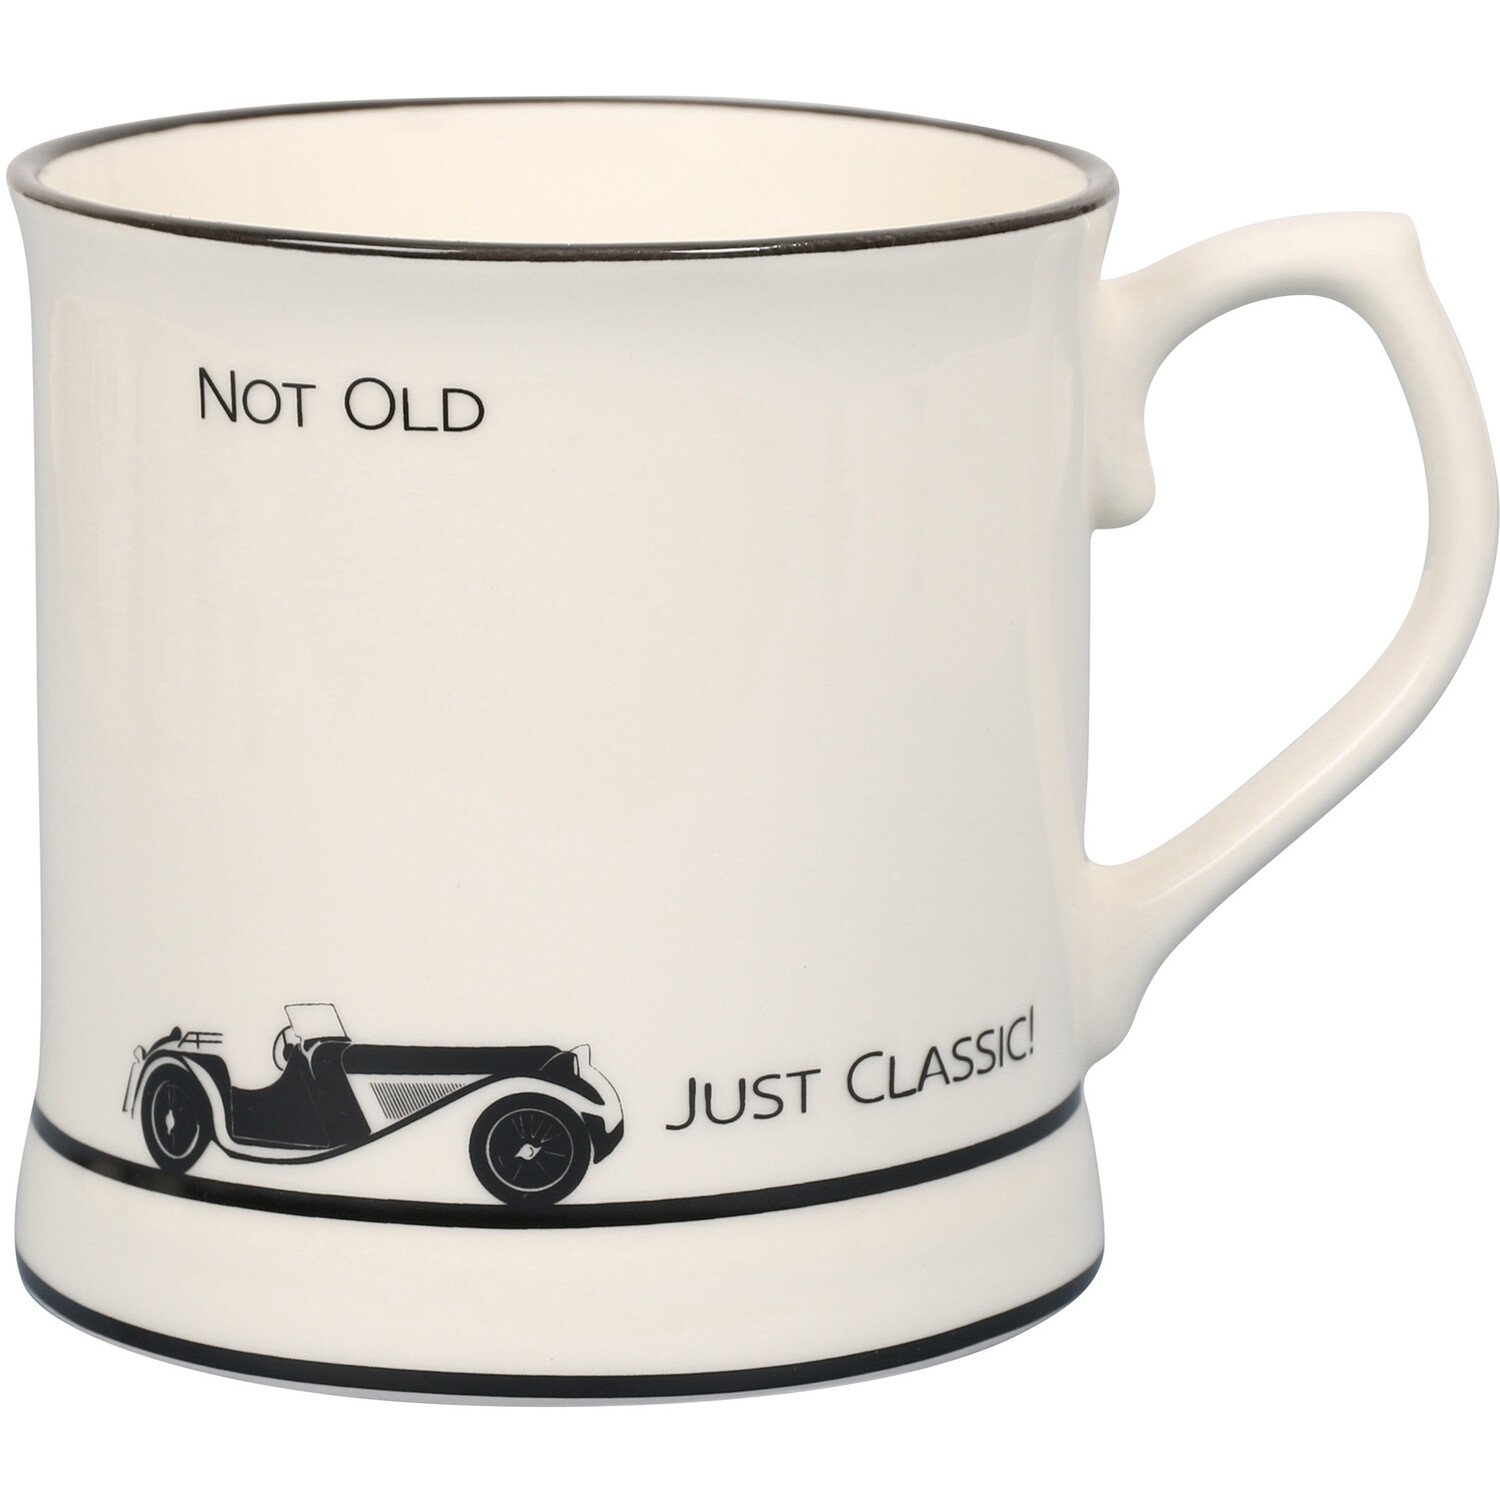 Not Old Just Classic Tankard Mug - White Image 1